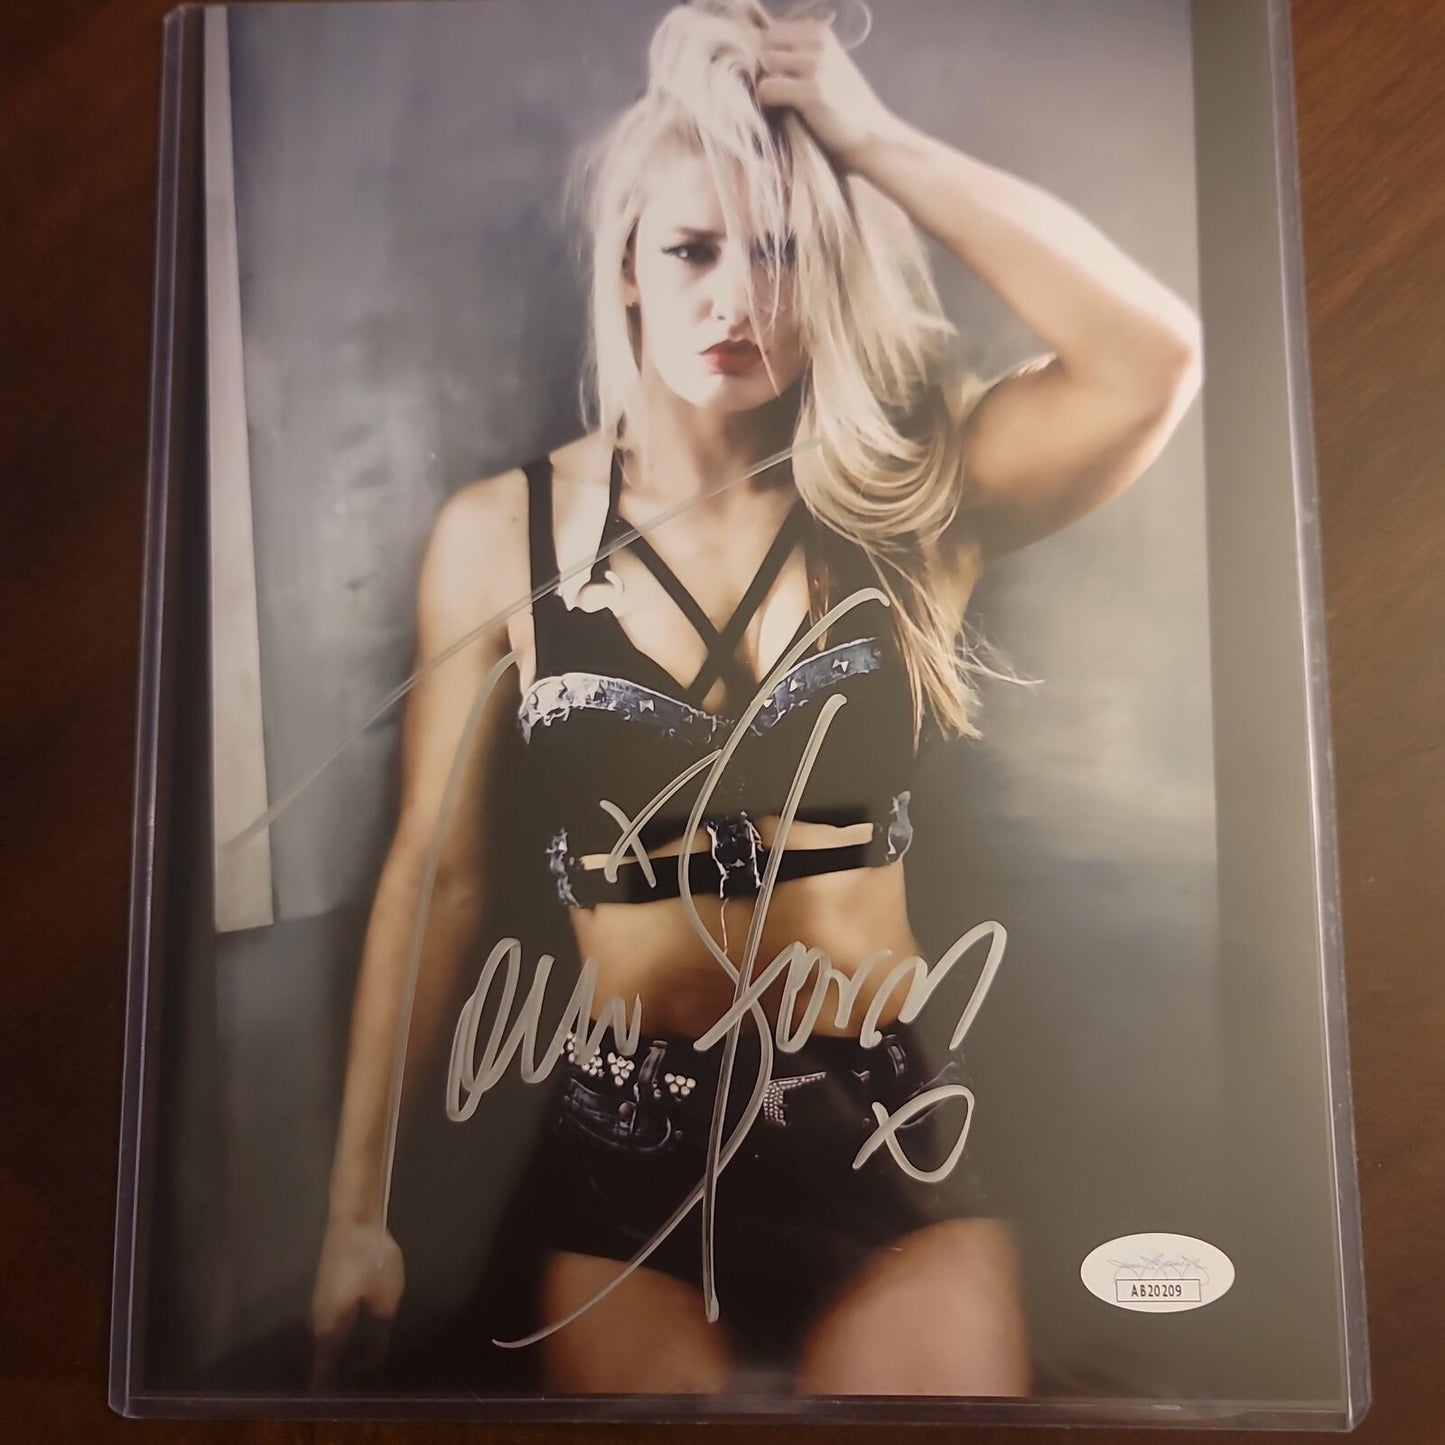 Toni Storm 8x10 jsa certed AEW Funhouse metallic photo signed auto autographed